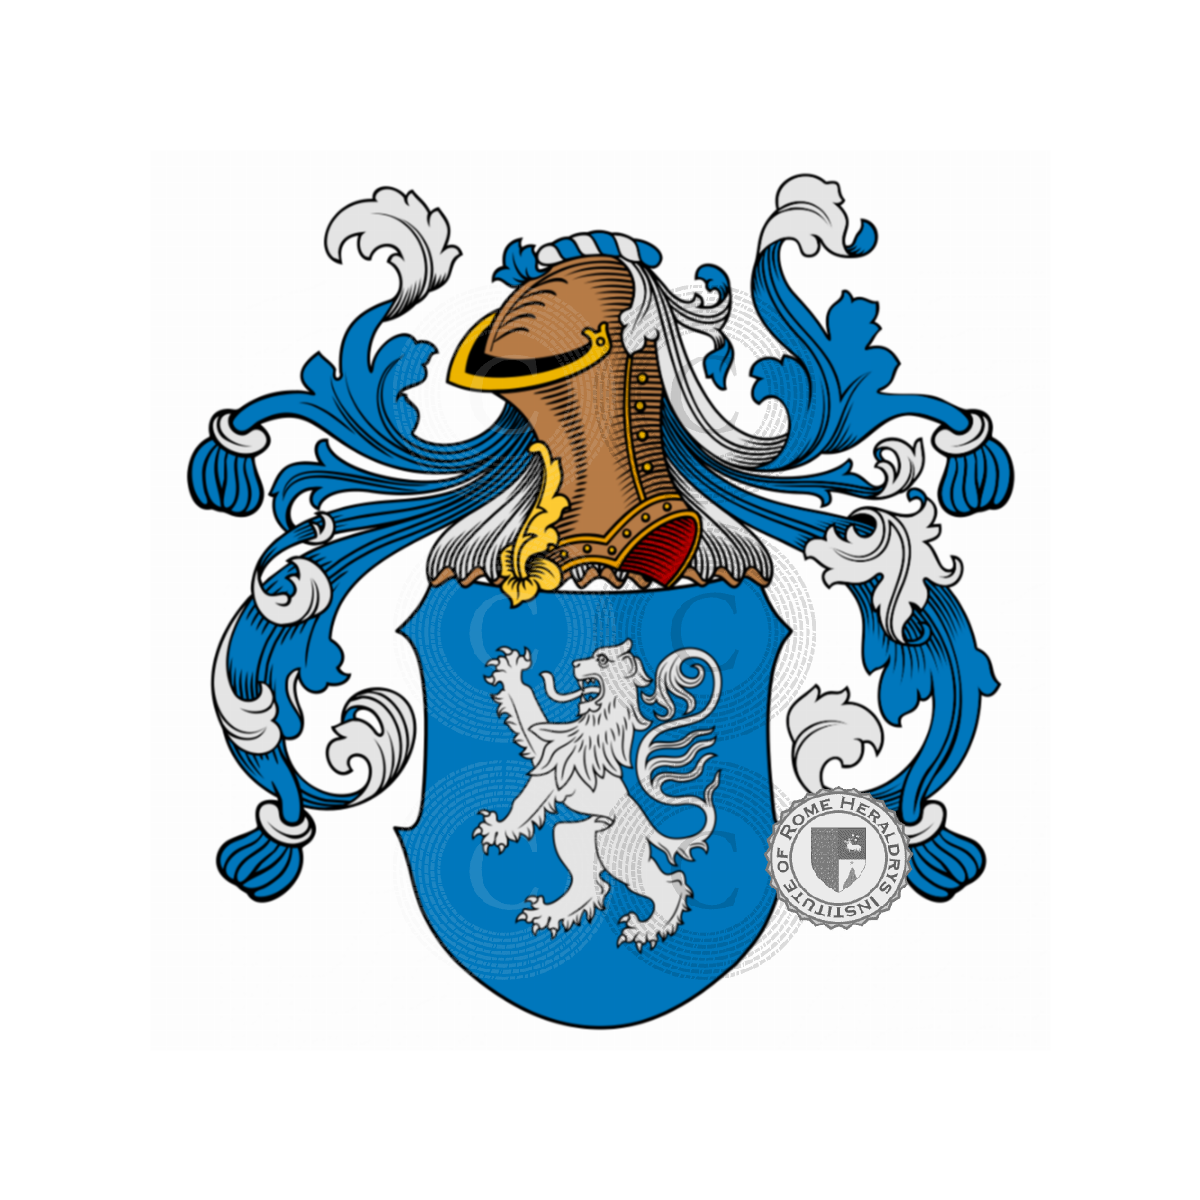 Wappen der FamilieAdriani, Adriani dal Pino,Andriani